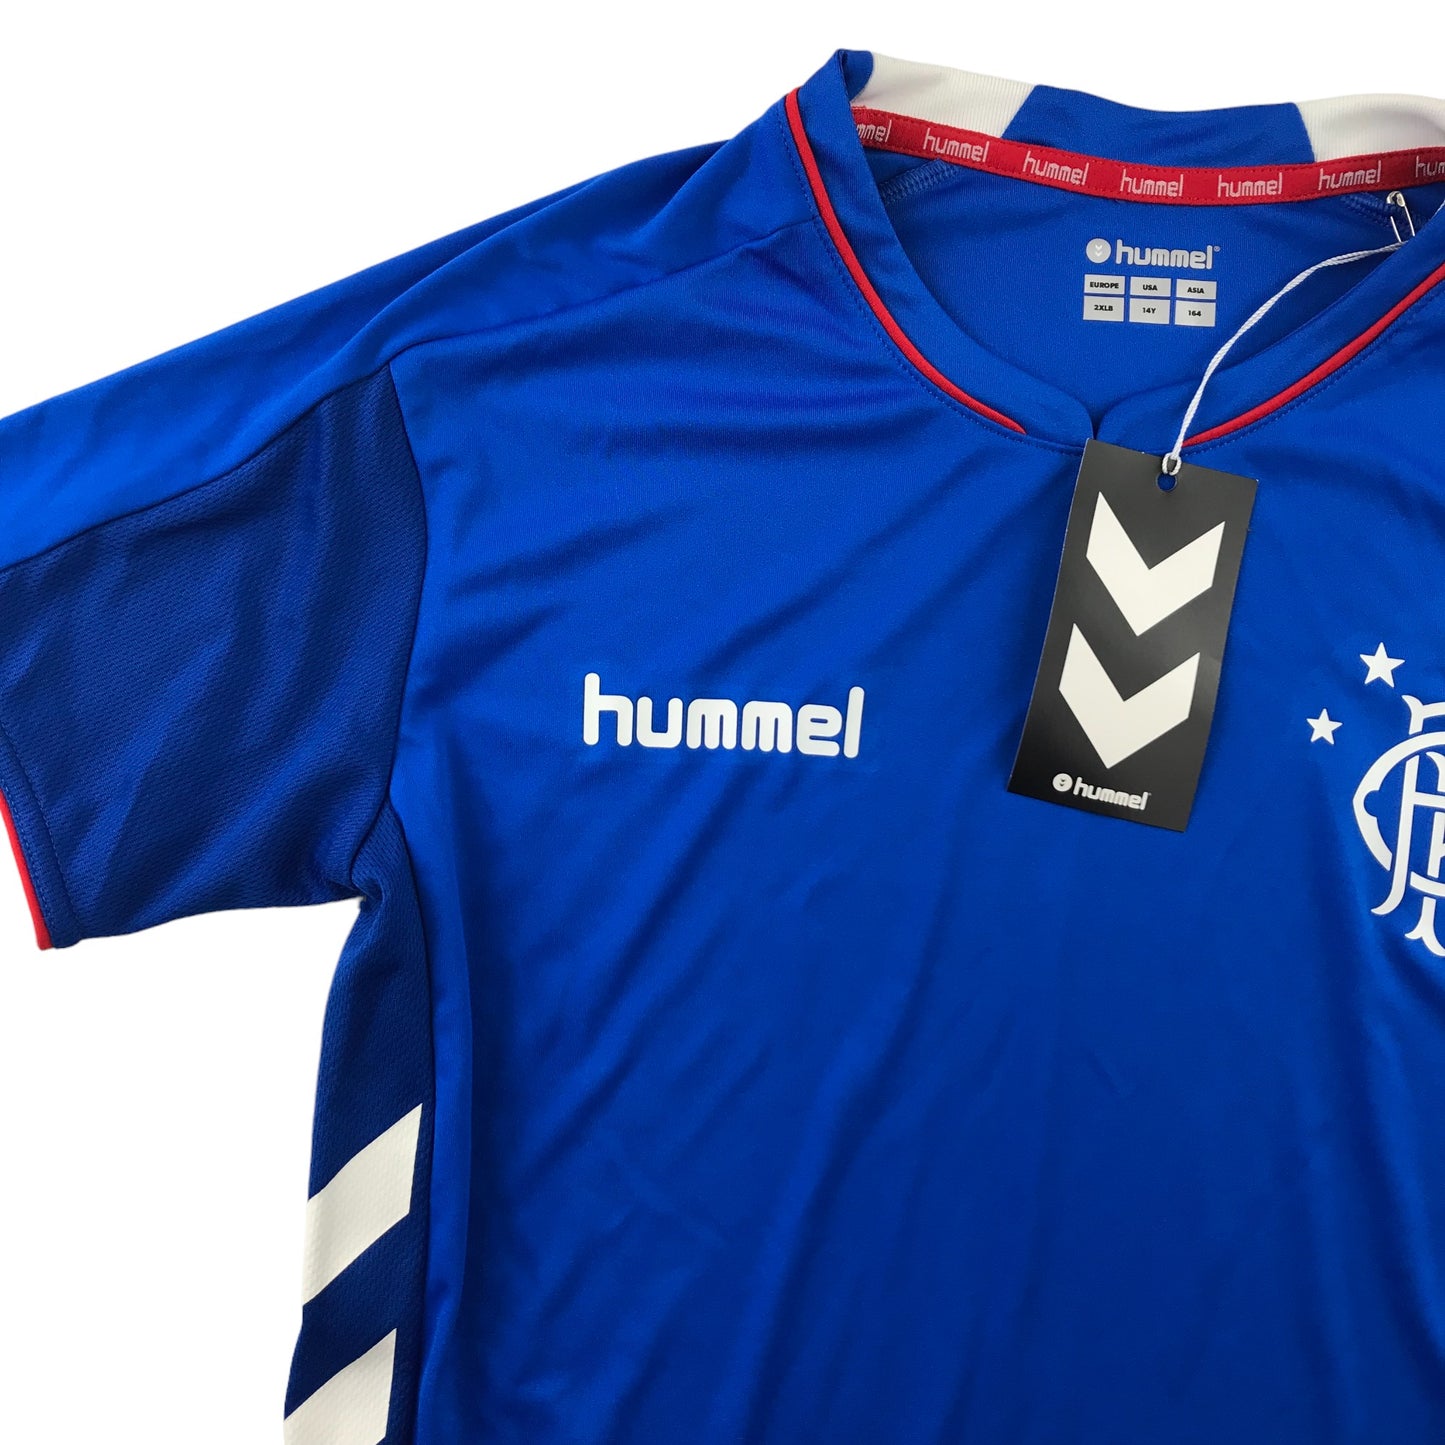 Hummel Rangers 18-19 home kit strip Age 14 Royal Blue Official Team Sports Apparel